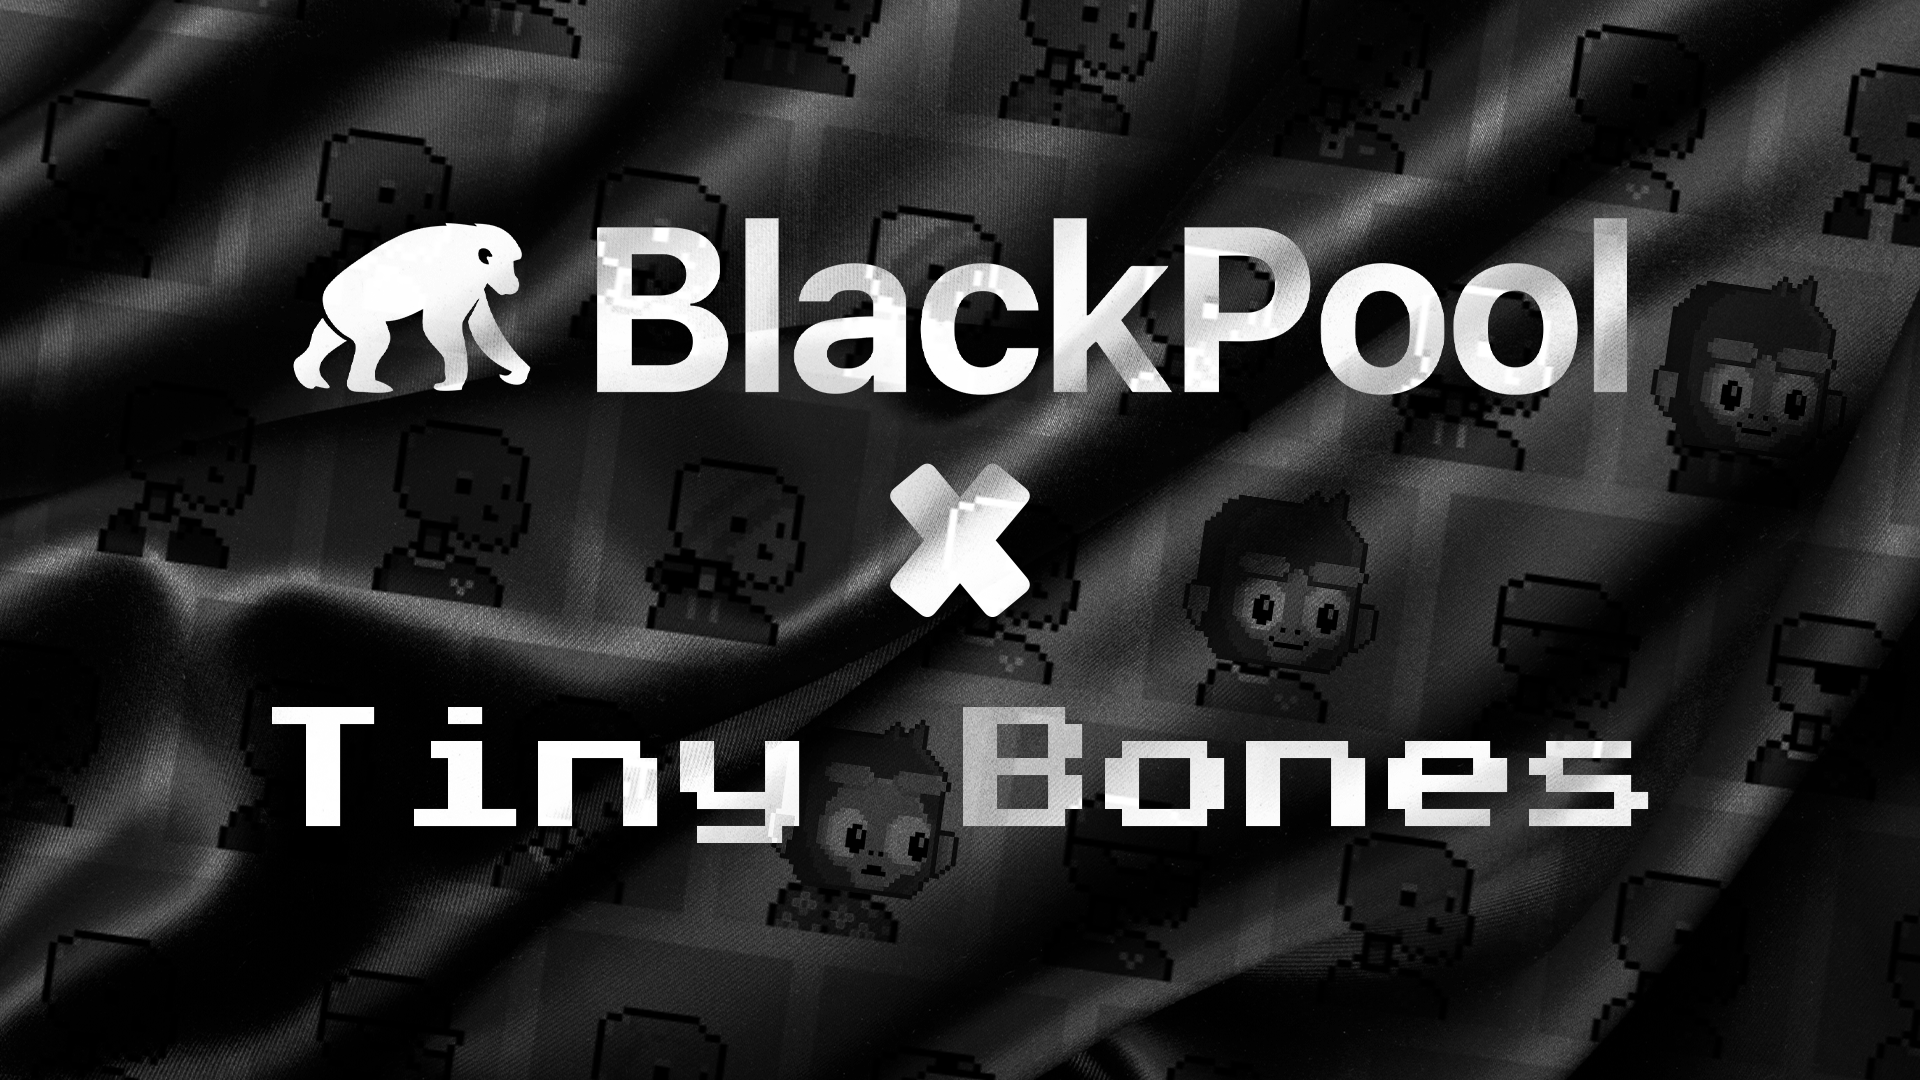 BlackPool joins the Tiny Bones Club!